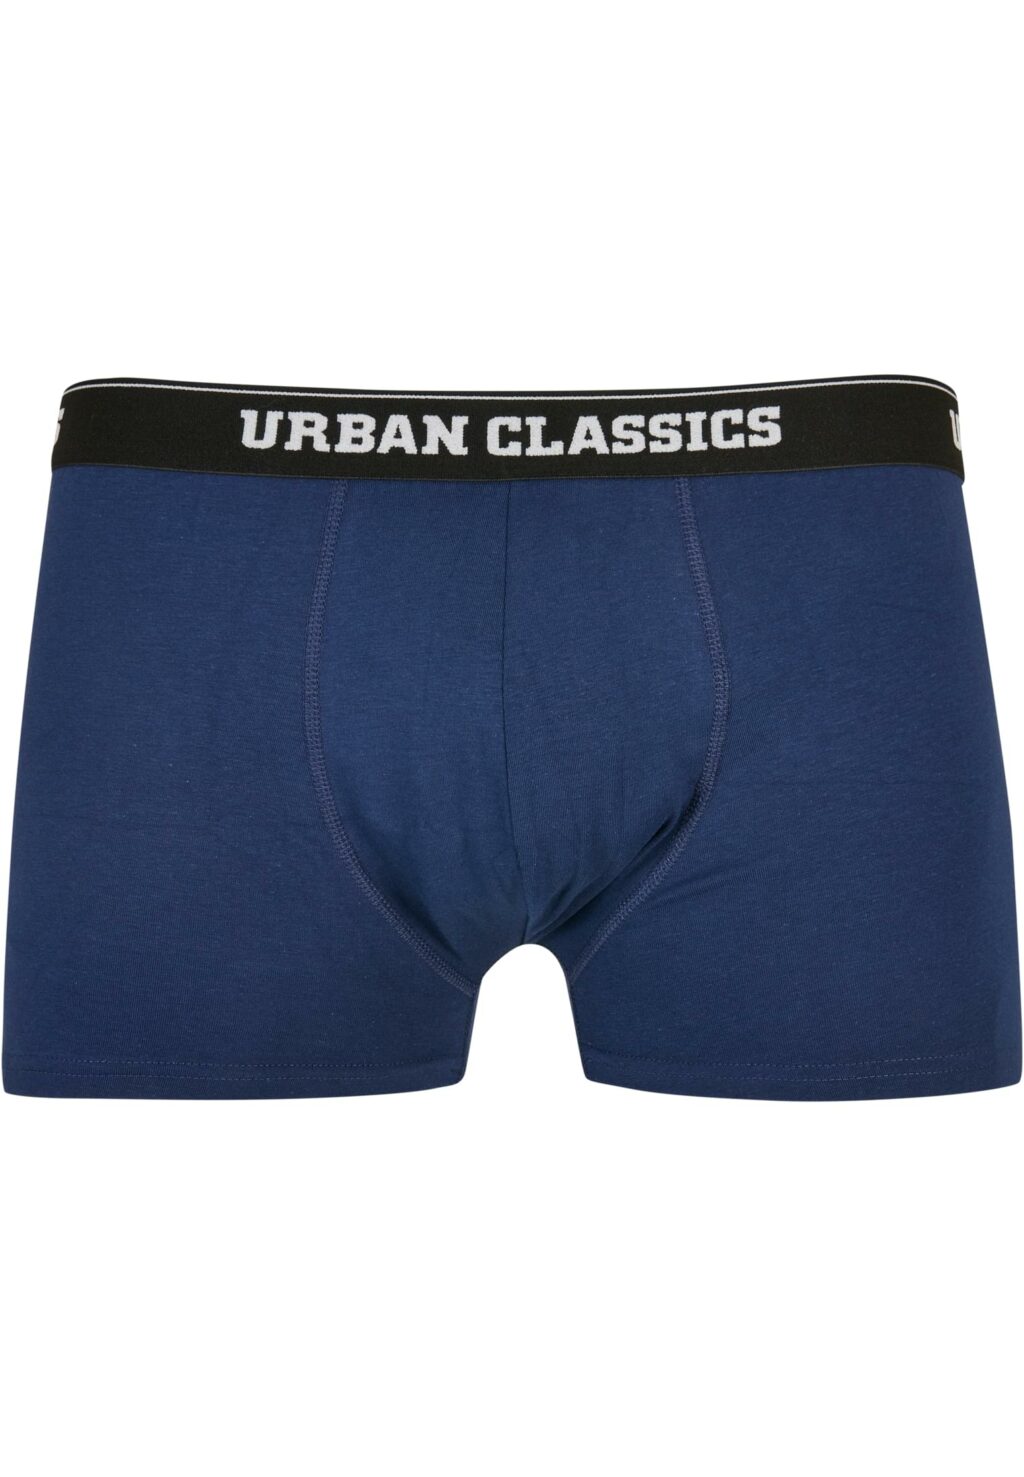 Urban Classics Organic Boxer Shorts 3-Pack darkblue+navy+black TB3838